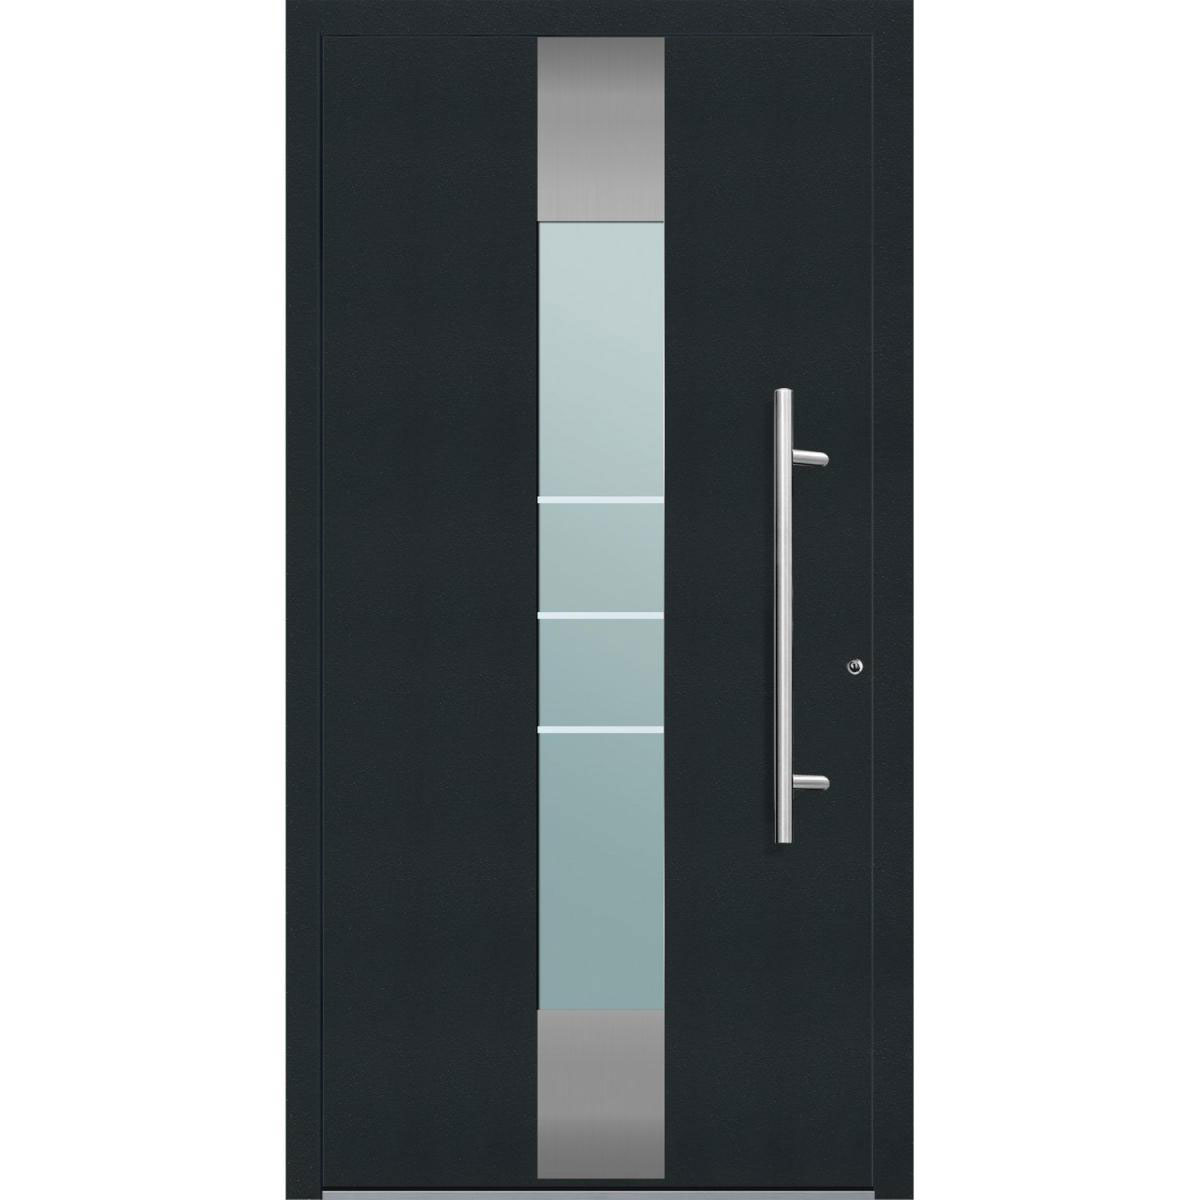 Aluminium Sicherheits-Haustür „Catania Exklusiv“, 75mm, anthrazit, 110x210 cm, Anschlag rechts, inkl. Griffset